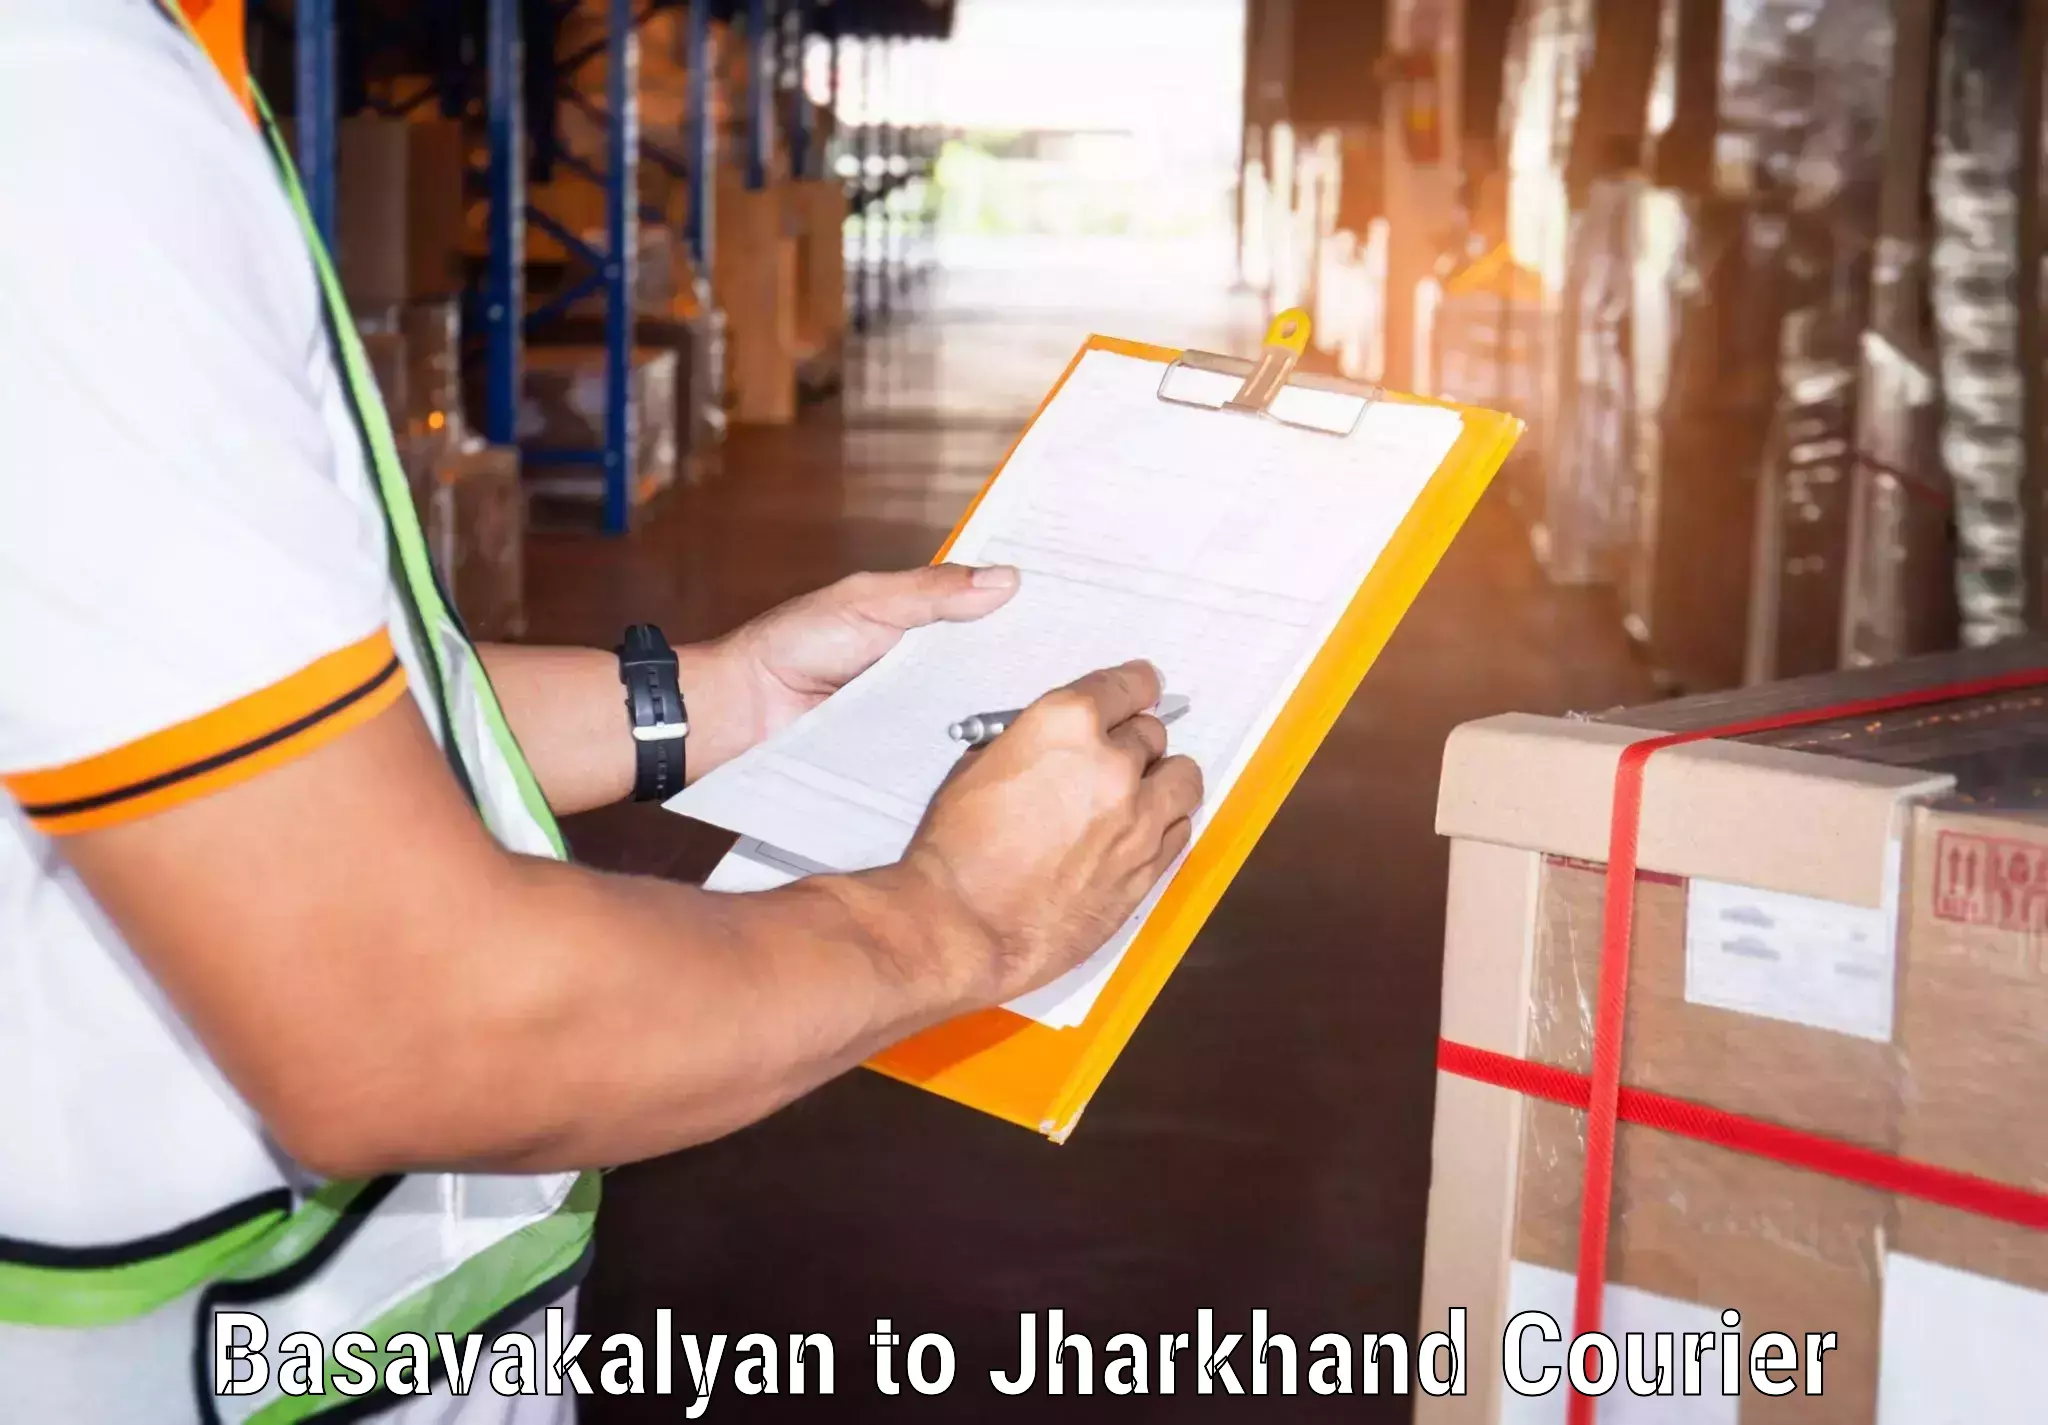 On-demand shipping options Basavakalyan to Dhanbad